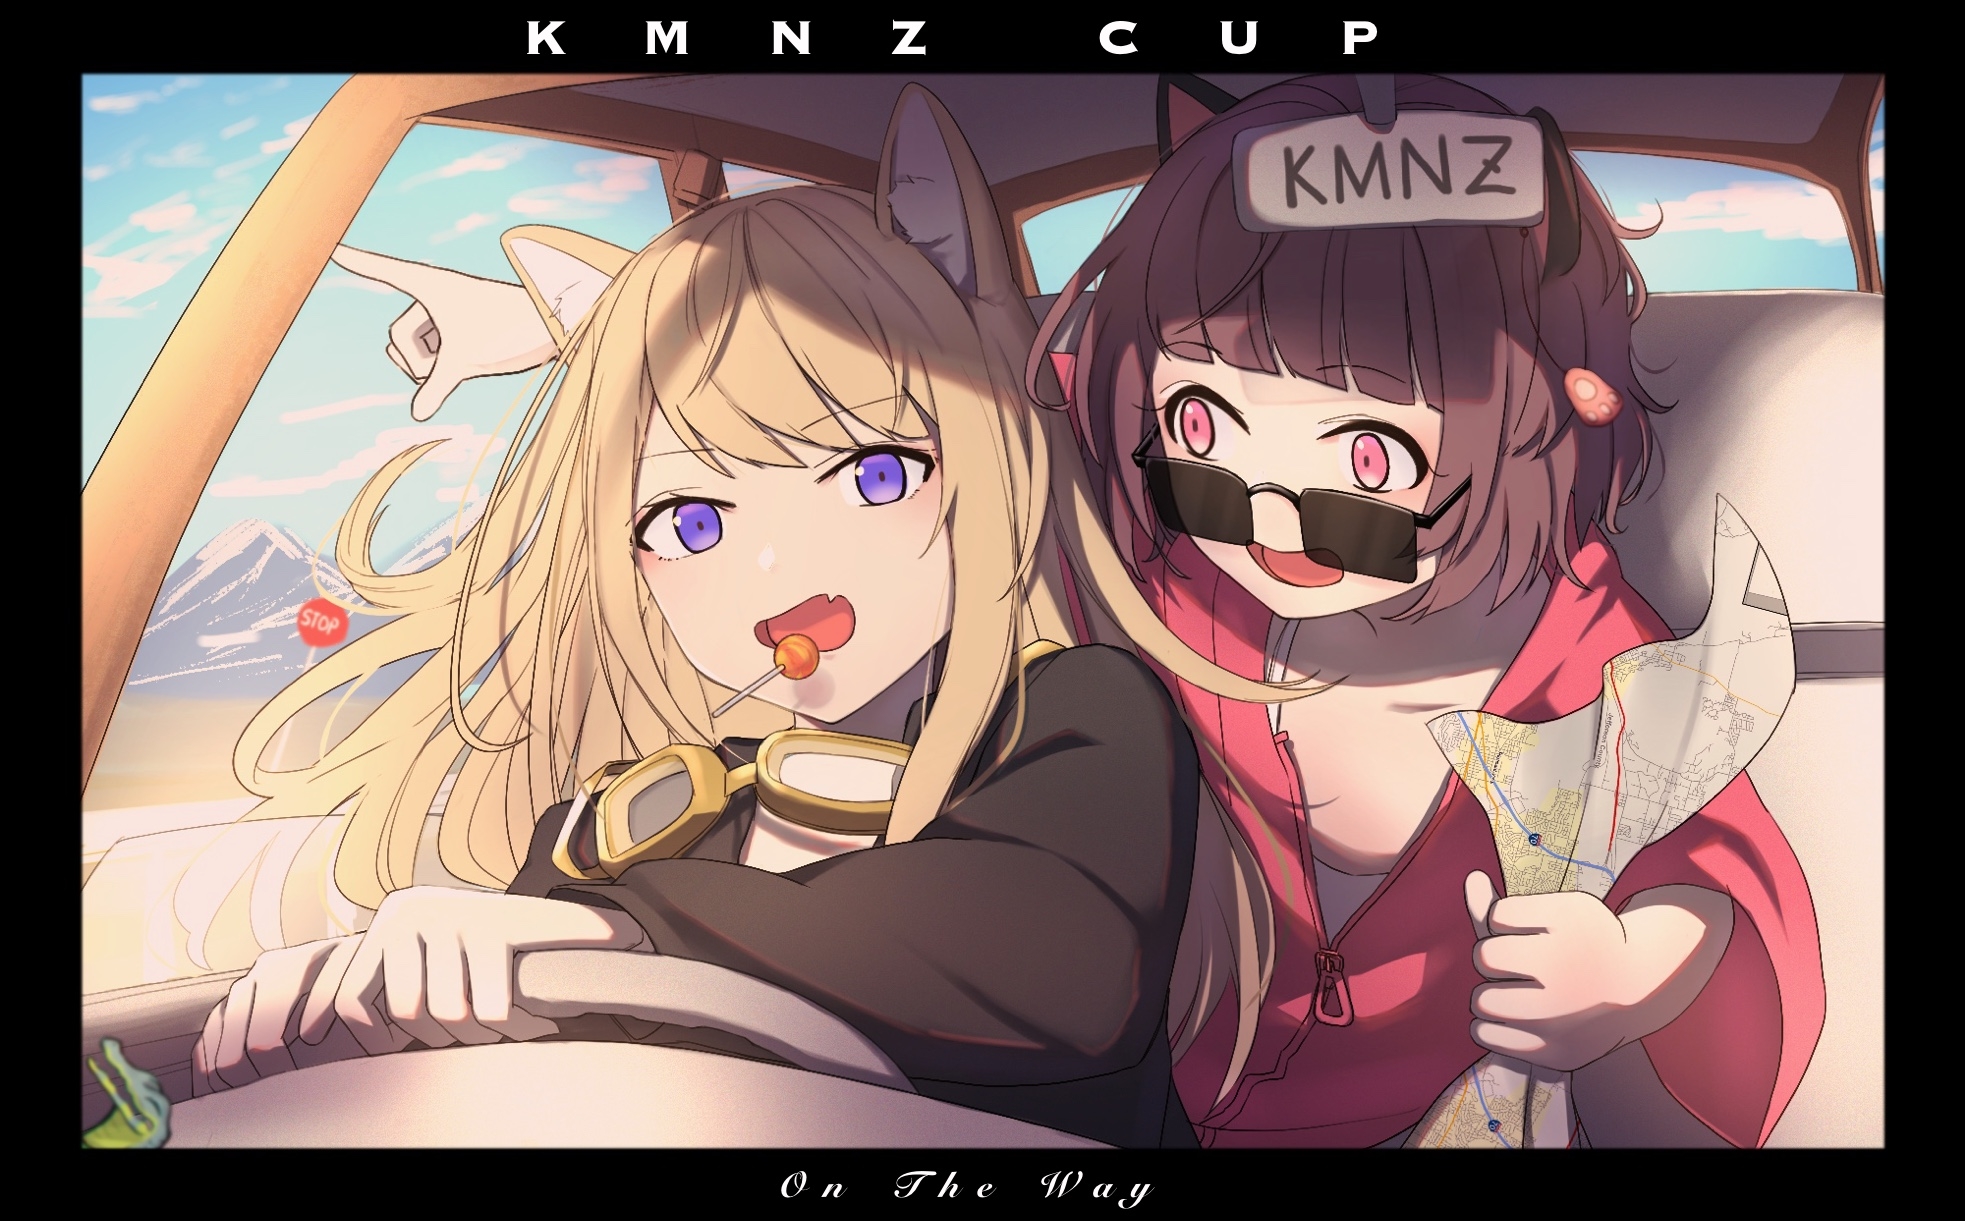 KMNZ CUP - On The Way插画图片壁纸